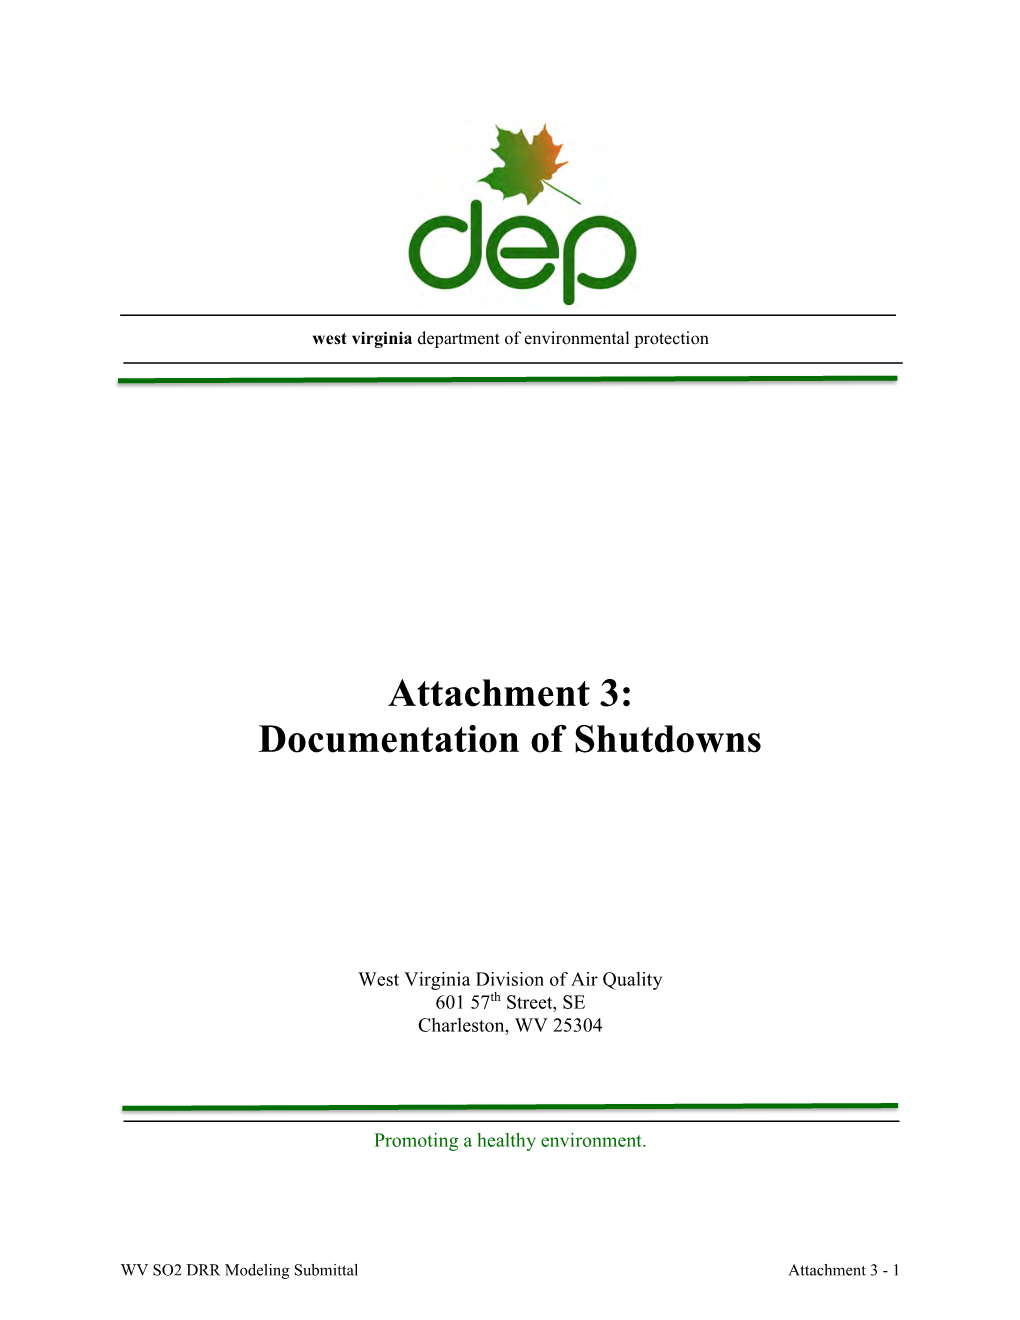 Attachment 3: Documentation of Shutdowns